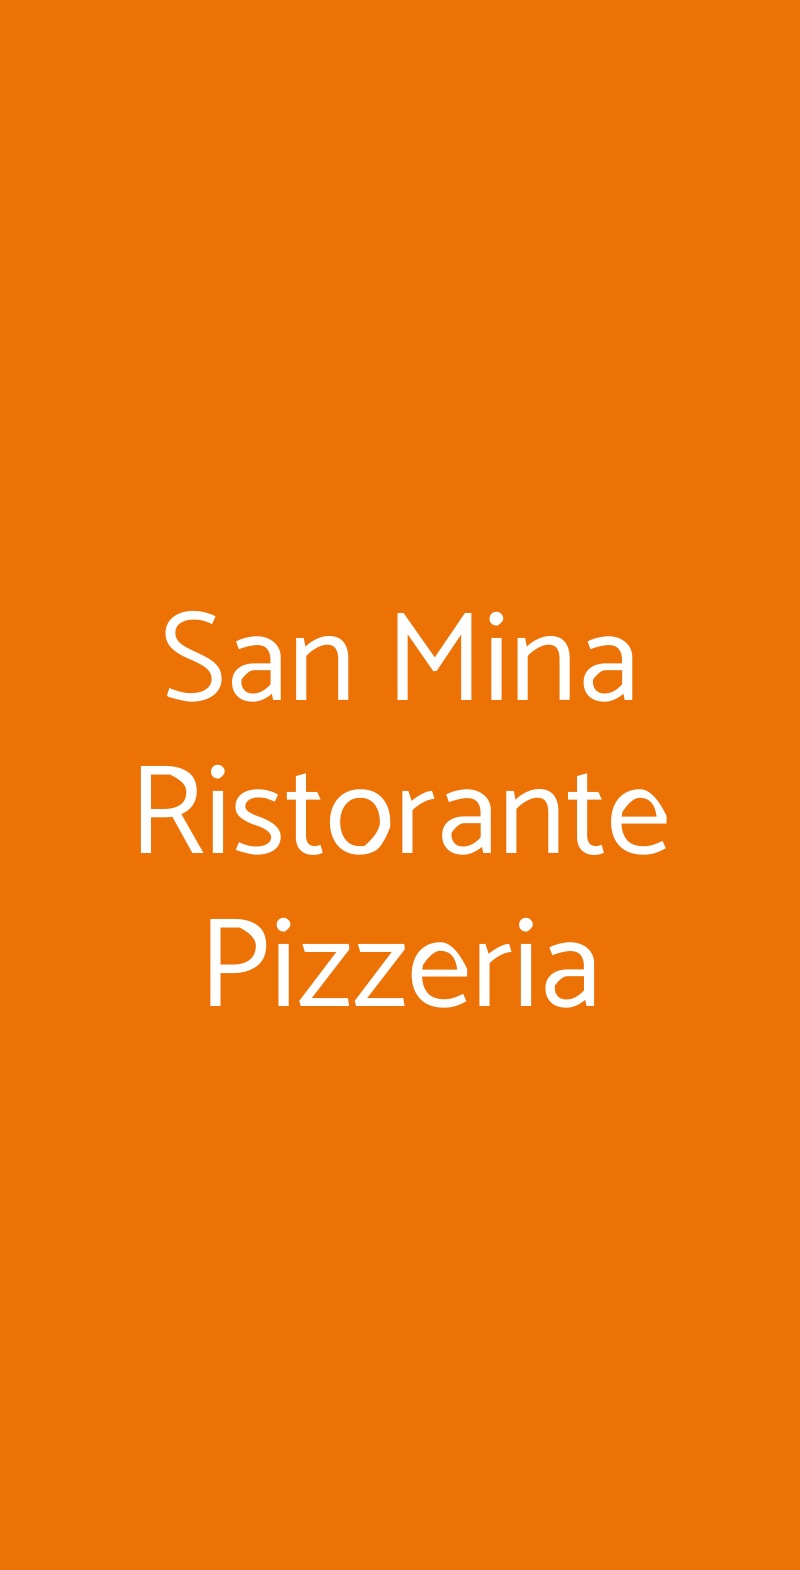 San Mina Ristorante Pizzeria Magenta menù 1 pagina